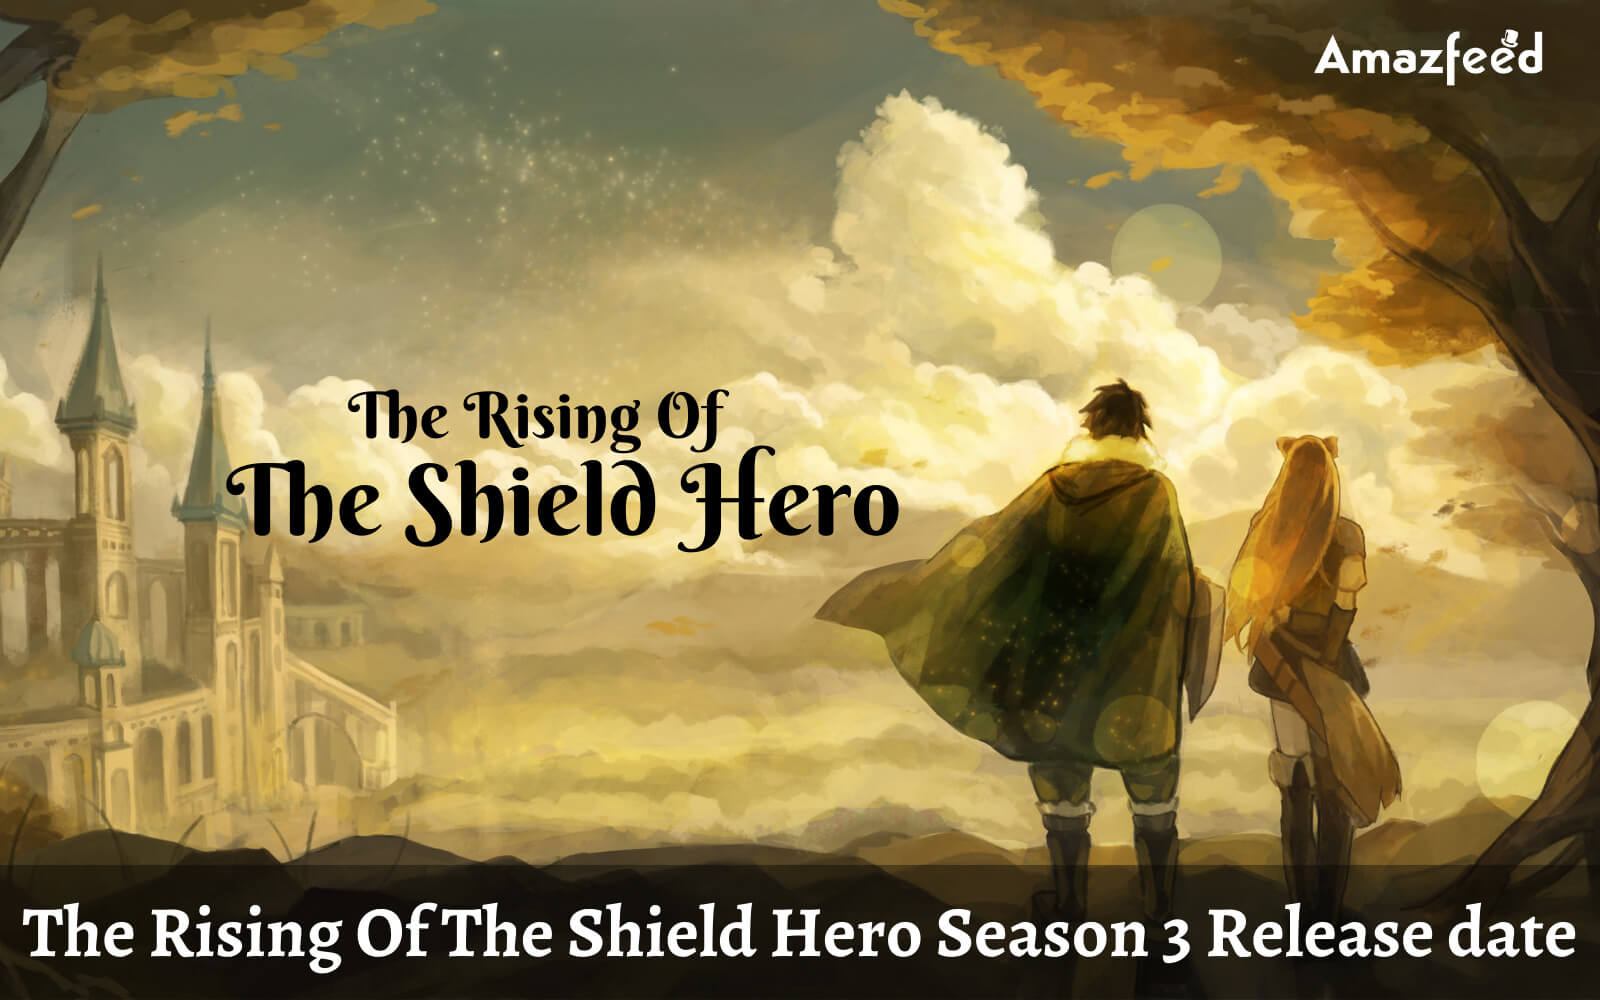 The Rising of the Shield Hero (TV Series 2019– ) - News - IMDb